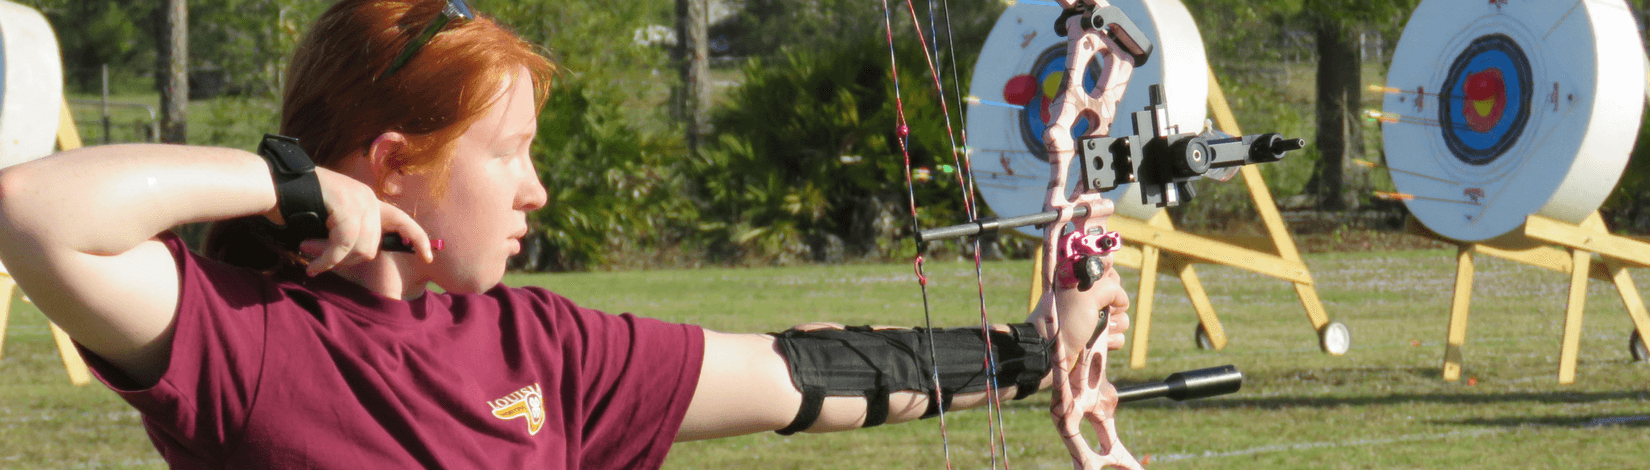 archery shooting arrows